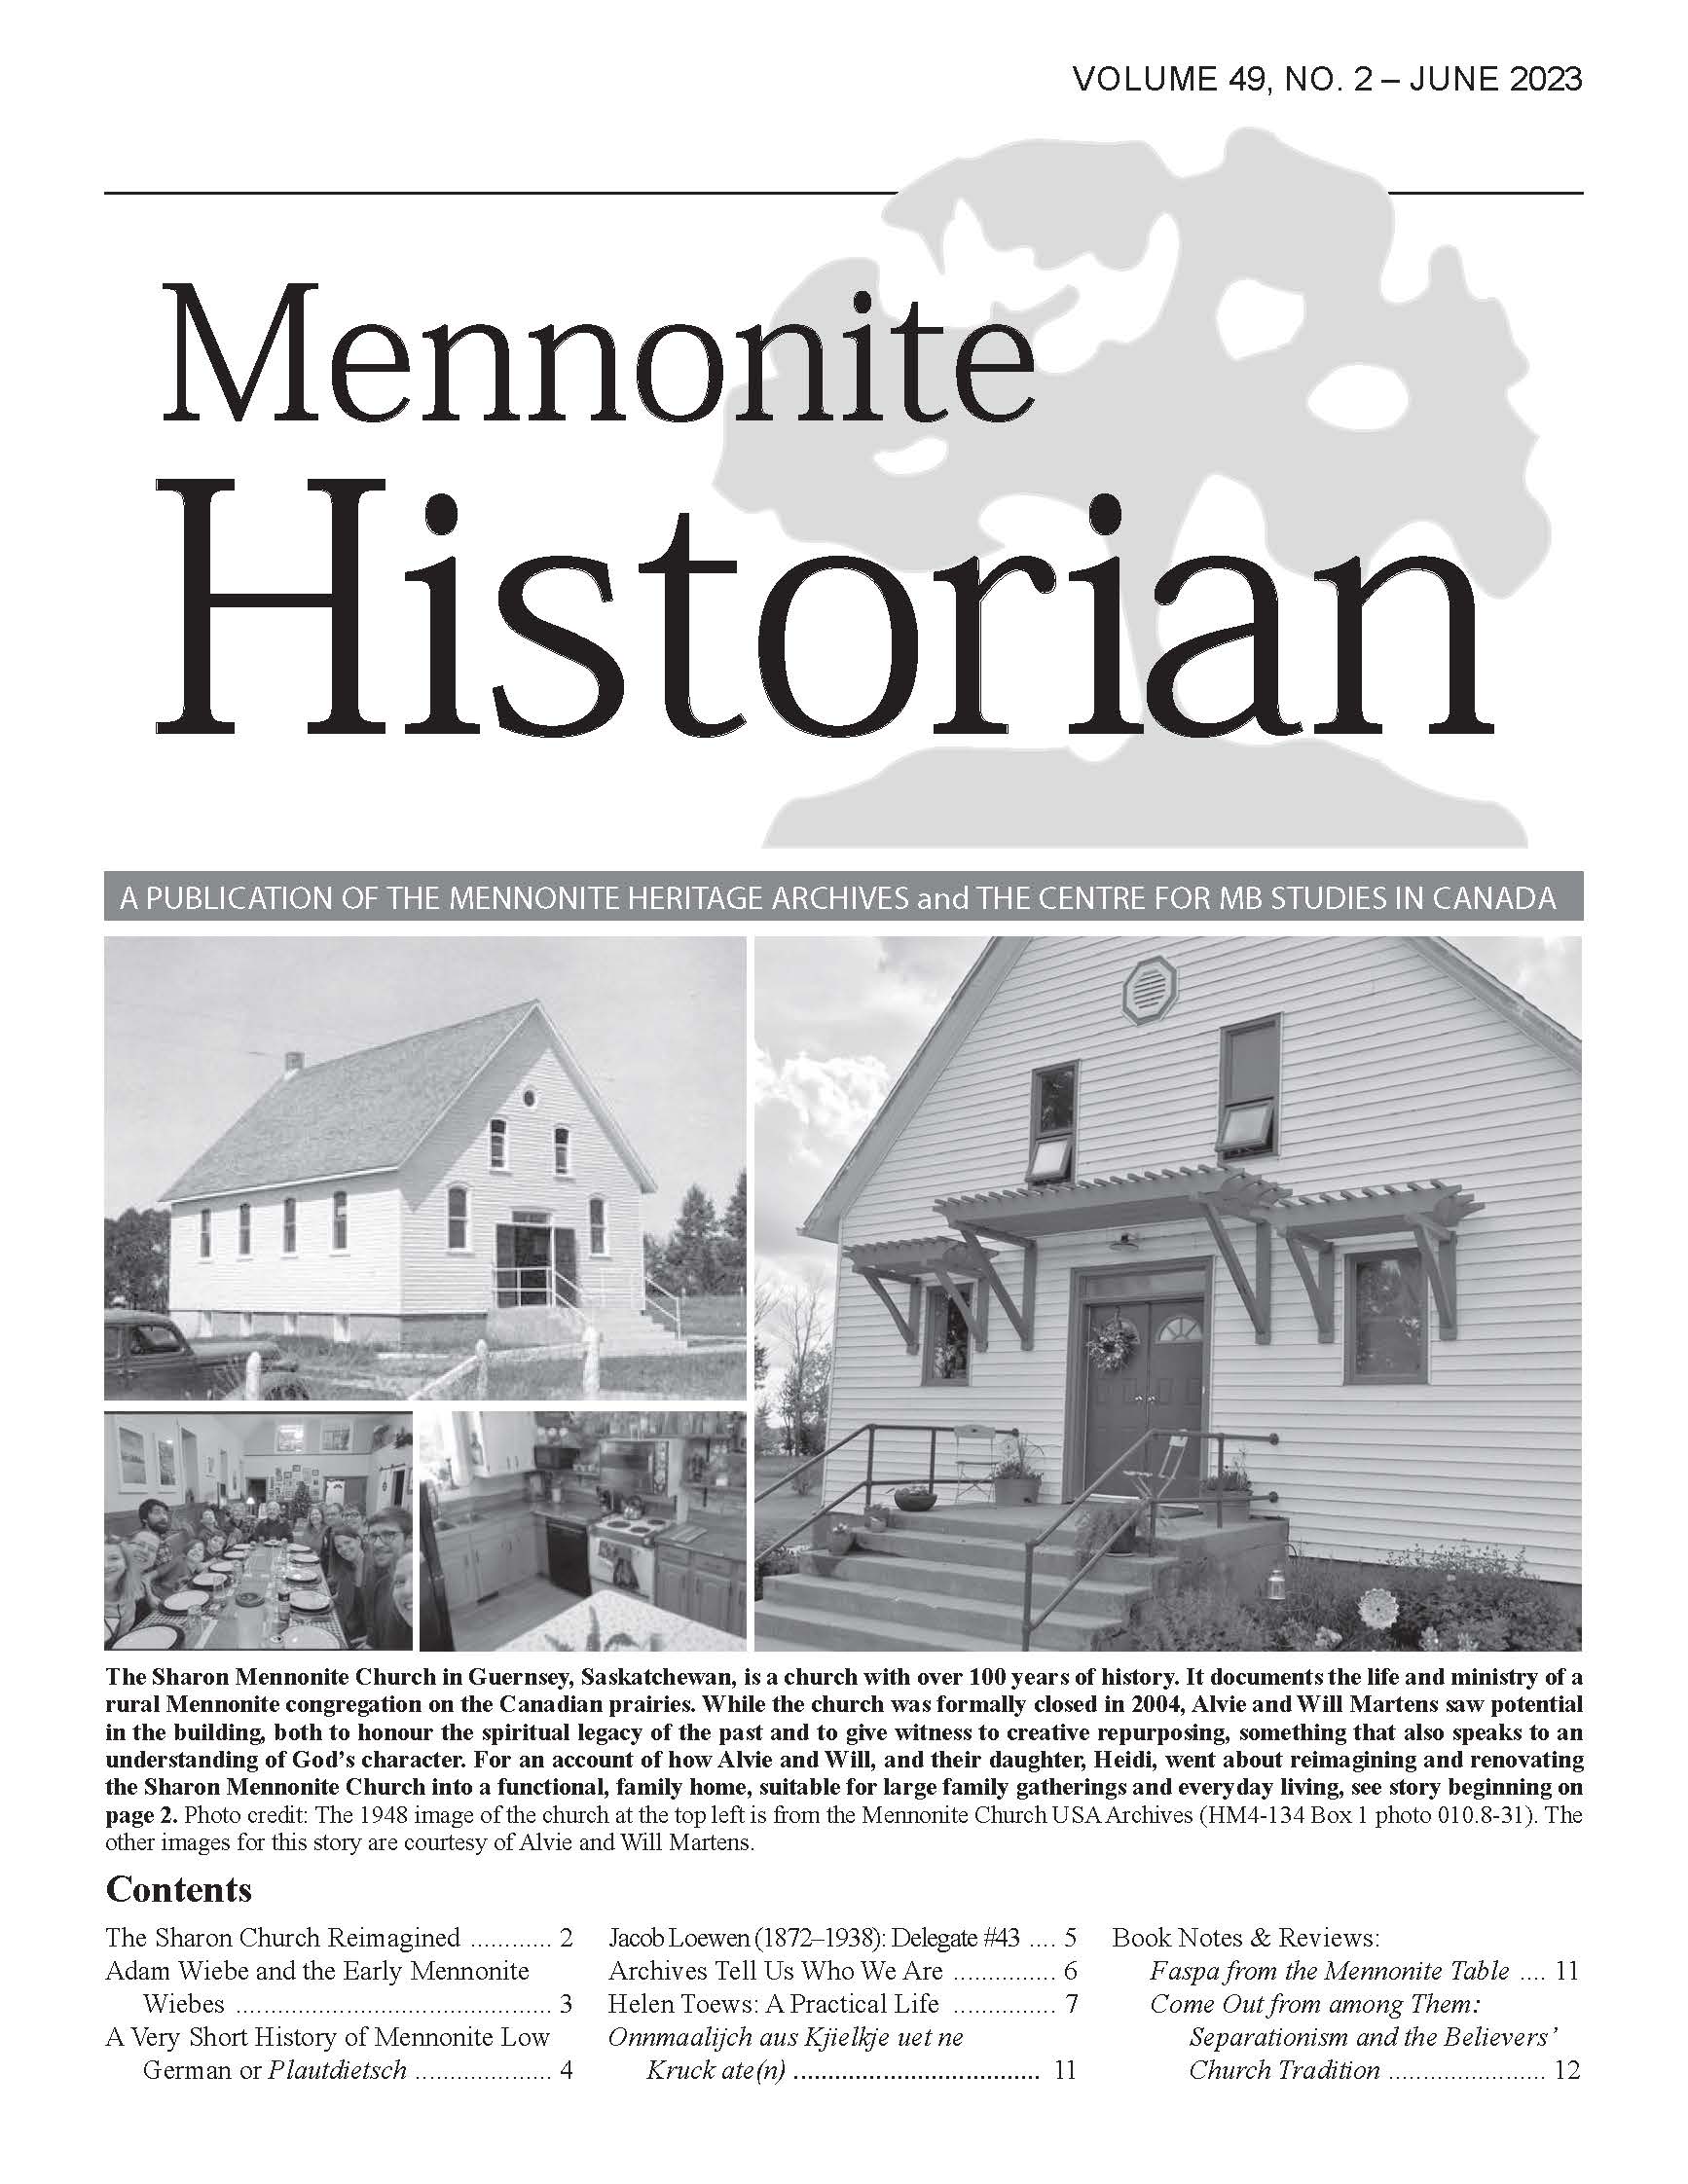 Mennonite Historian (Jun. 2023)